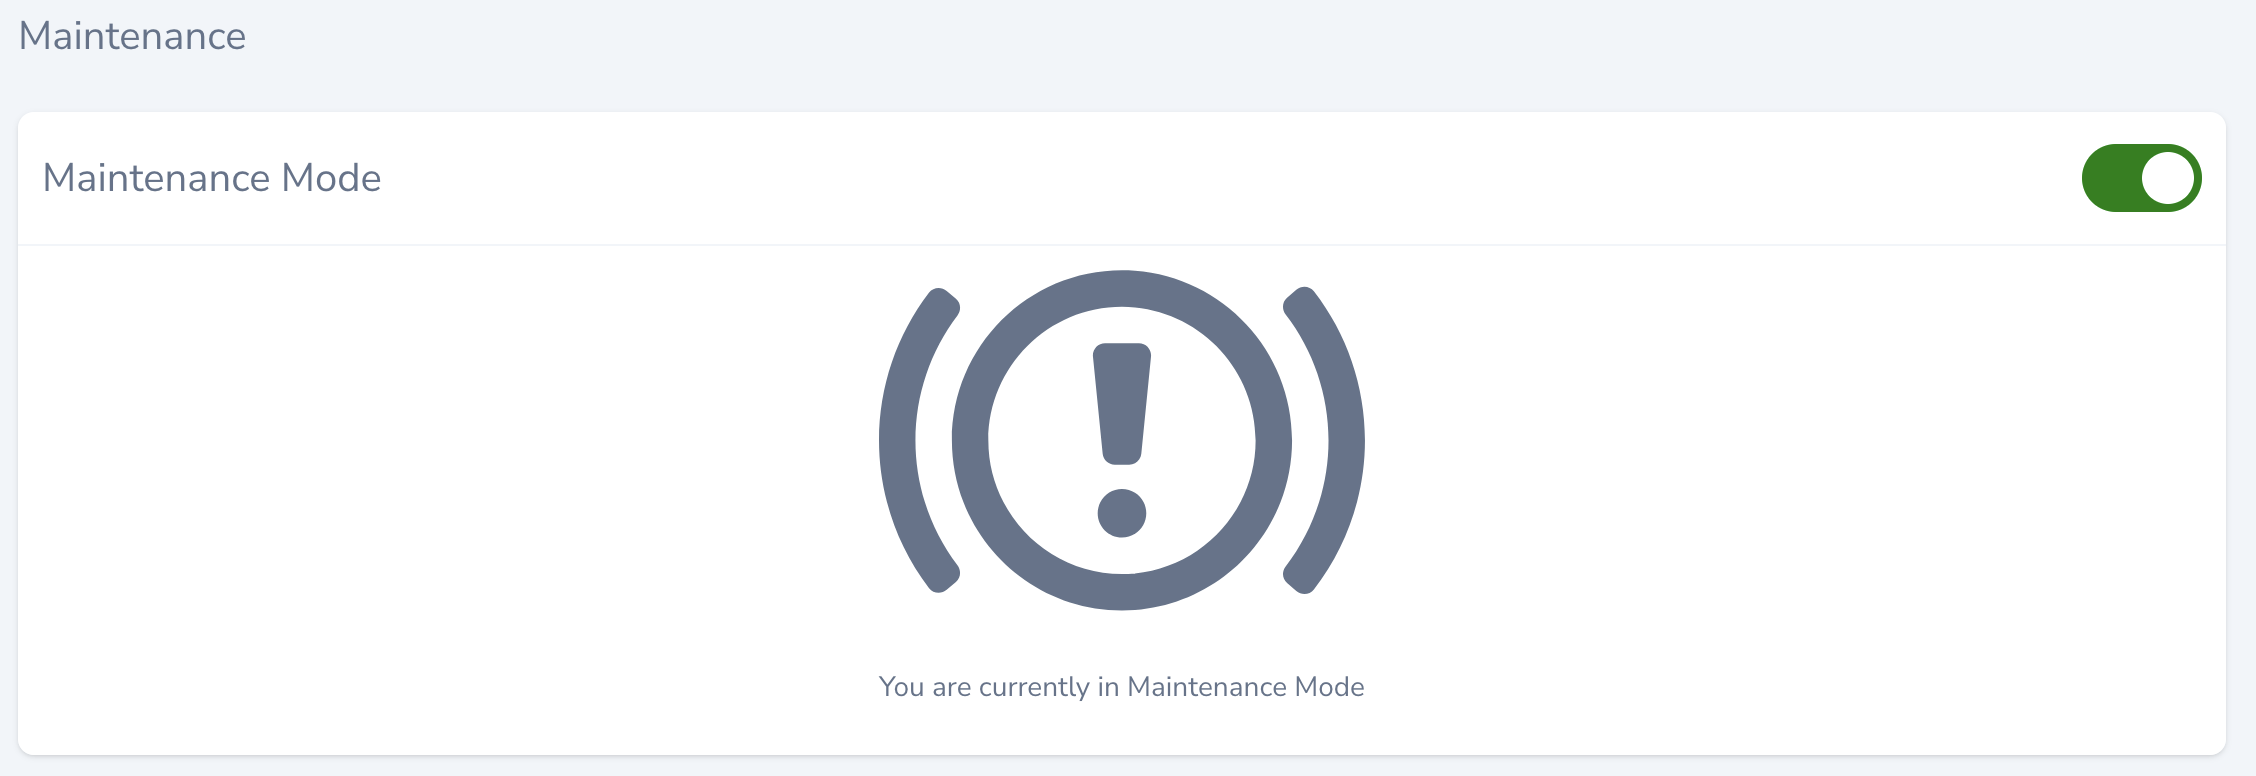 Maintenance Mode enabled Screenshot